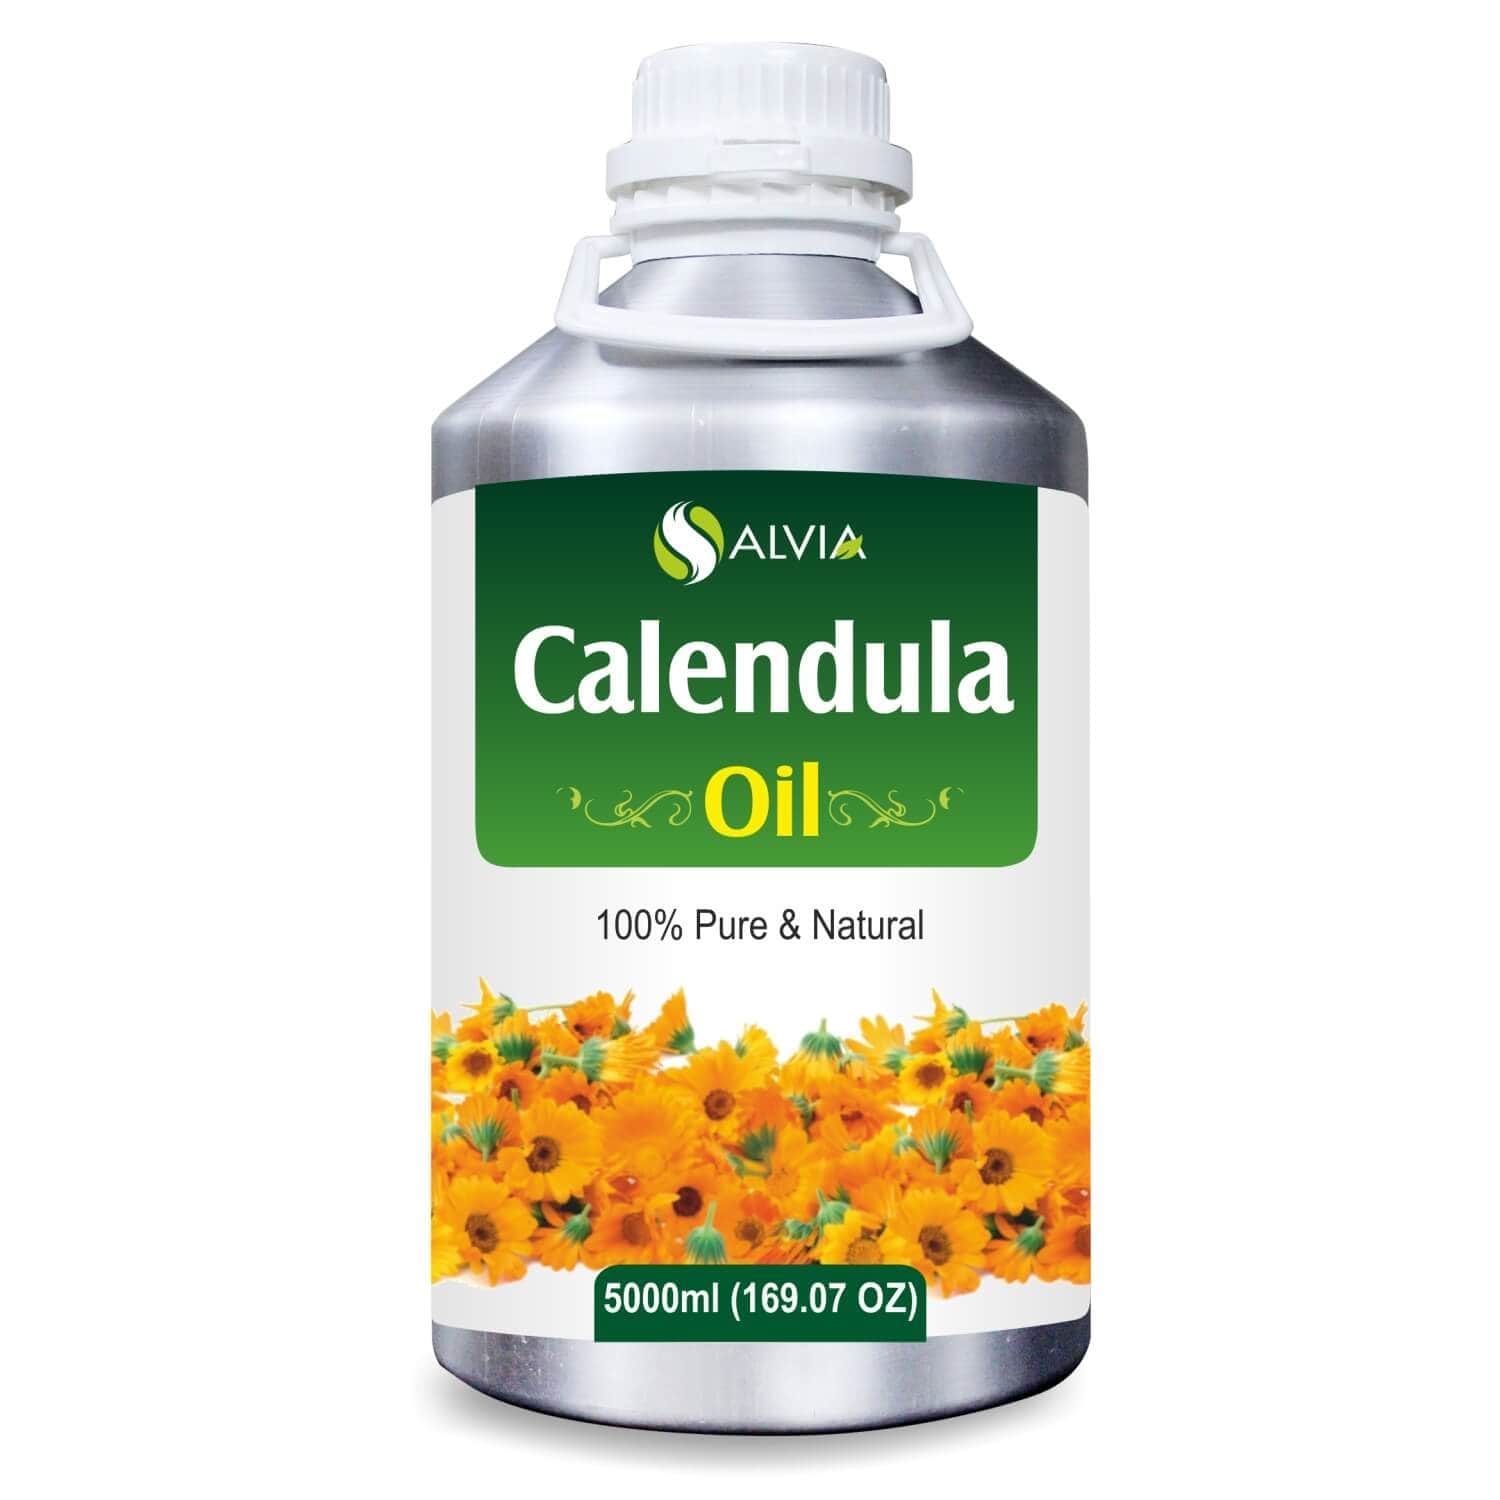 Salvia Natural Carrier Oils 5000ml Calendula Oil (Calendula officinalis) Pure & Natural Carrier Oil Treats Dandruff, Nourishes Skin, Anti-Aging Properties, Glows Skin